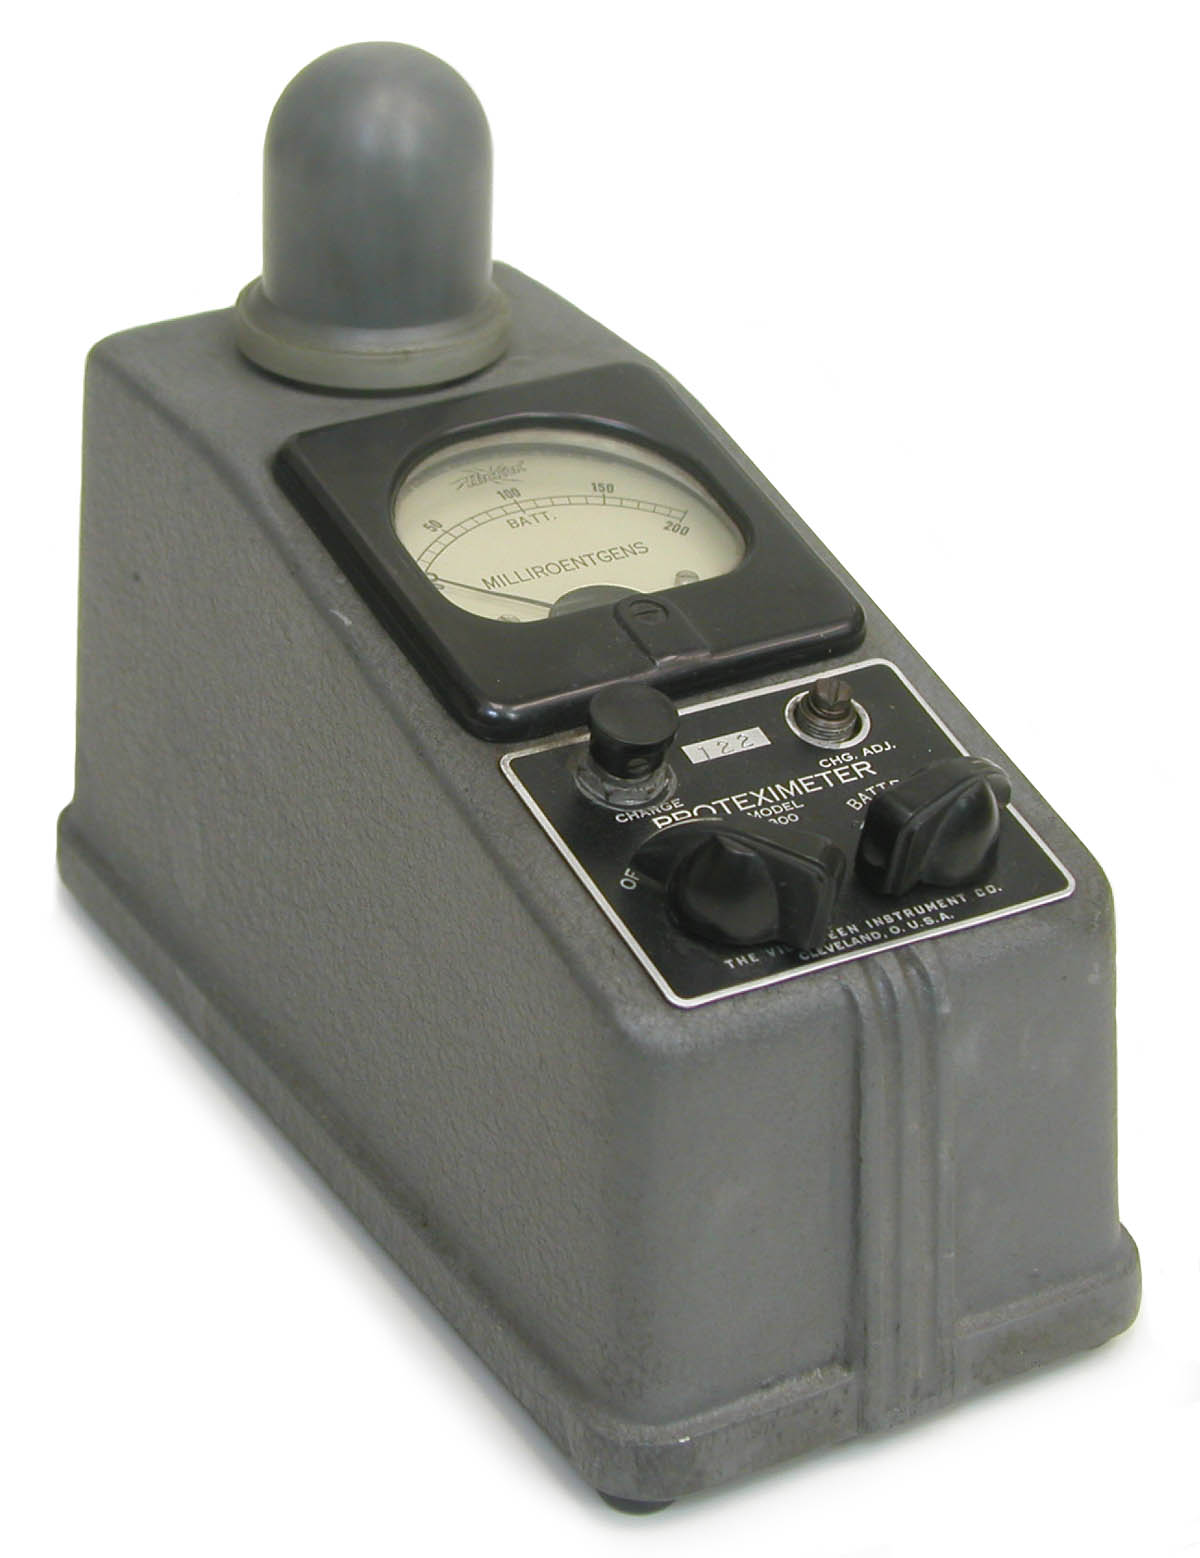 Victoreen Model 300 "Proteximeter"